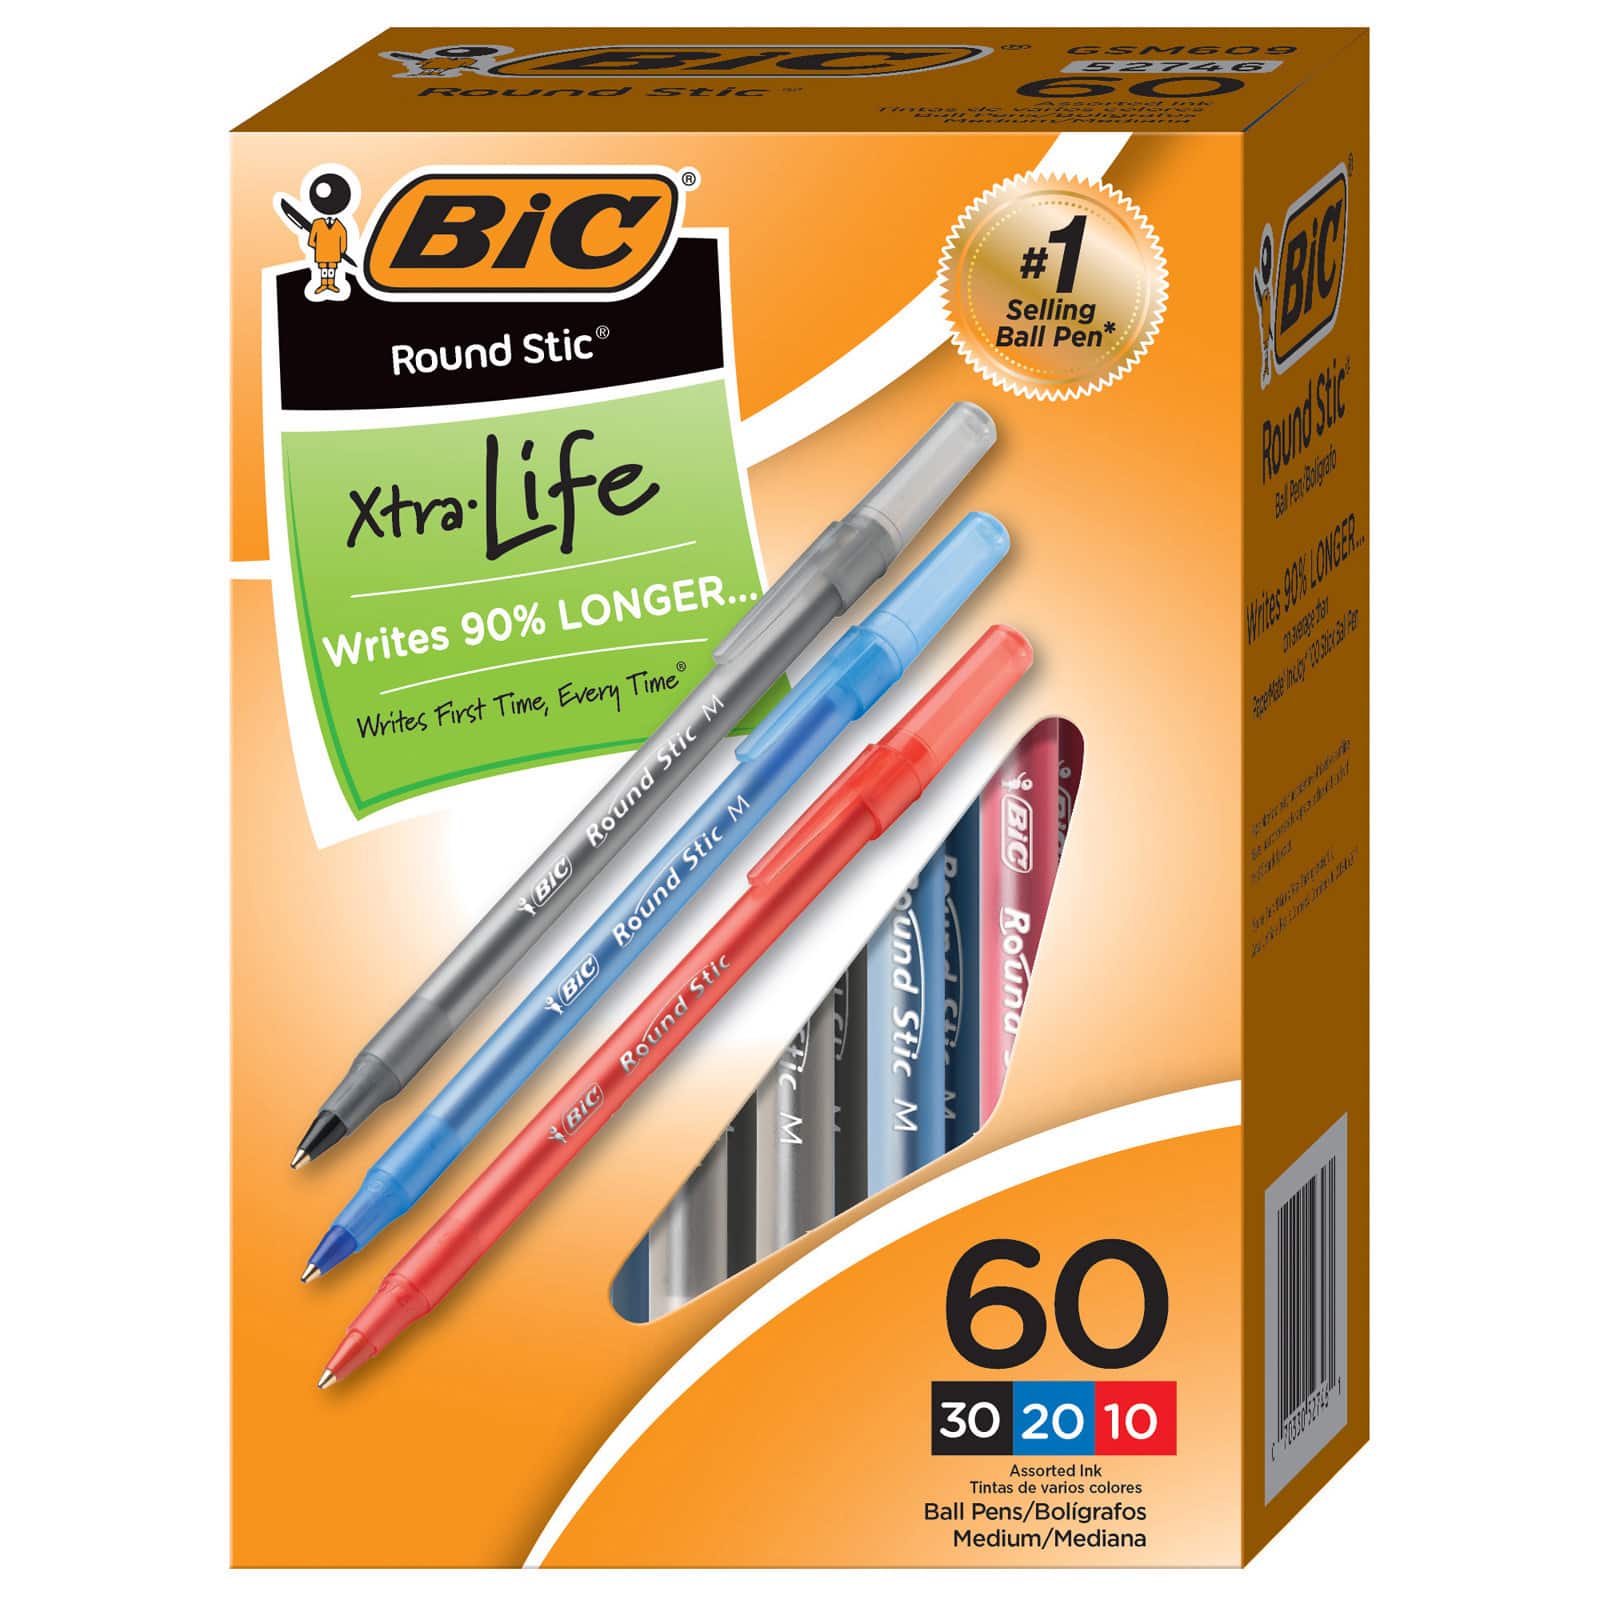 BIC Round Stic Grip Xtra Comfort Black Fine Ink Pen 5 Boxes 60 Pens for sale online